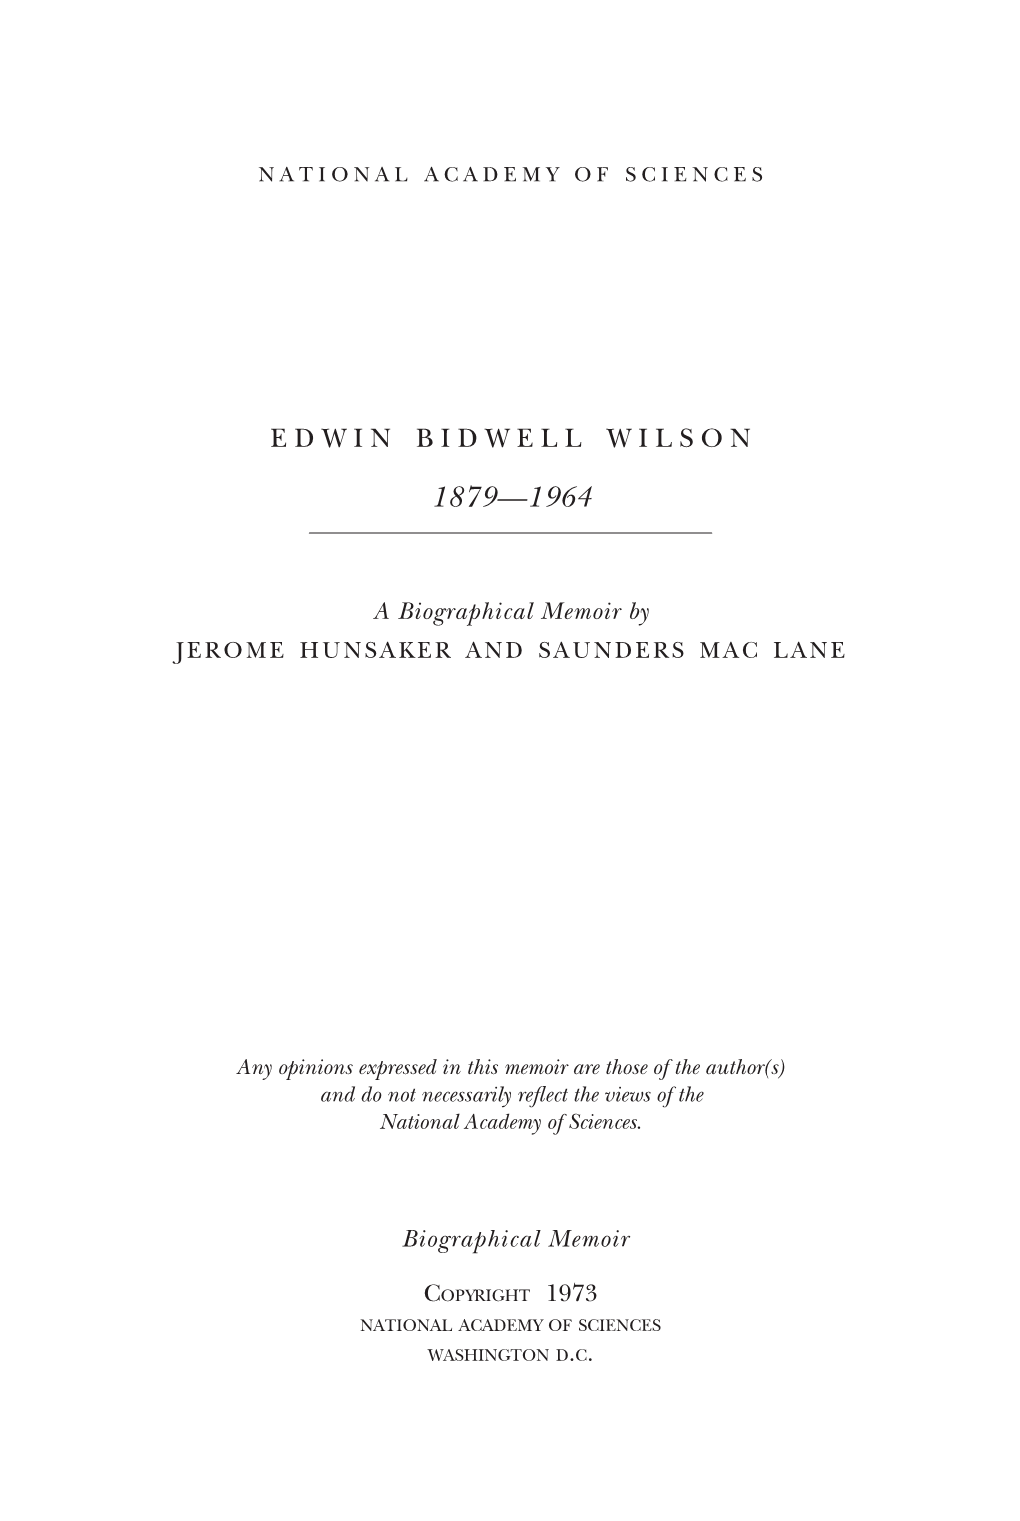 Edwin Bidwell Wilson